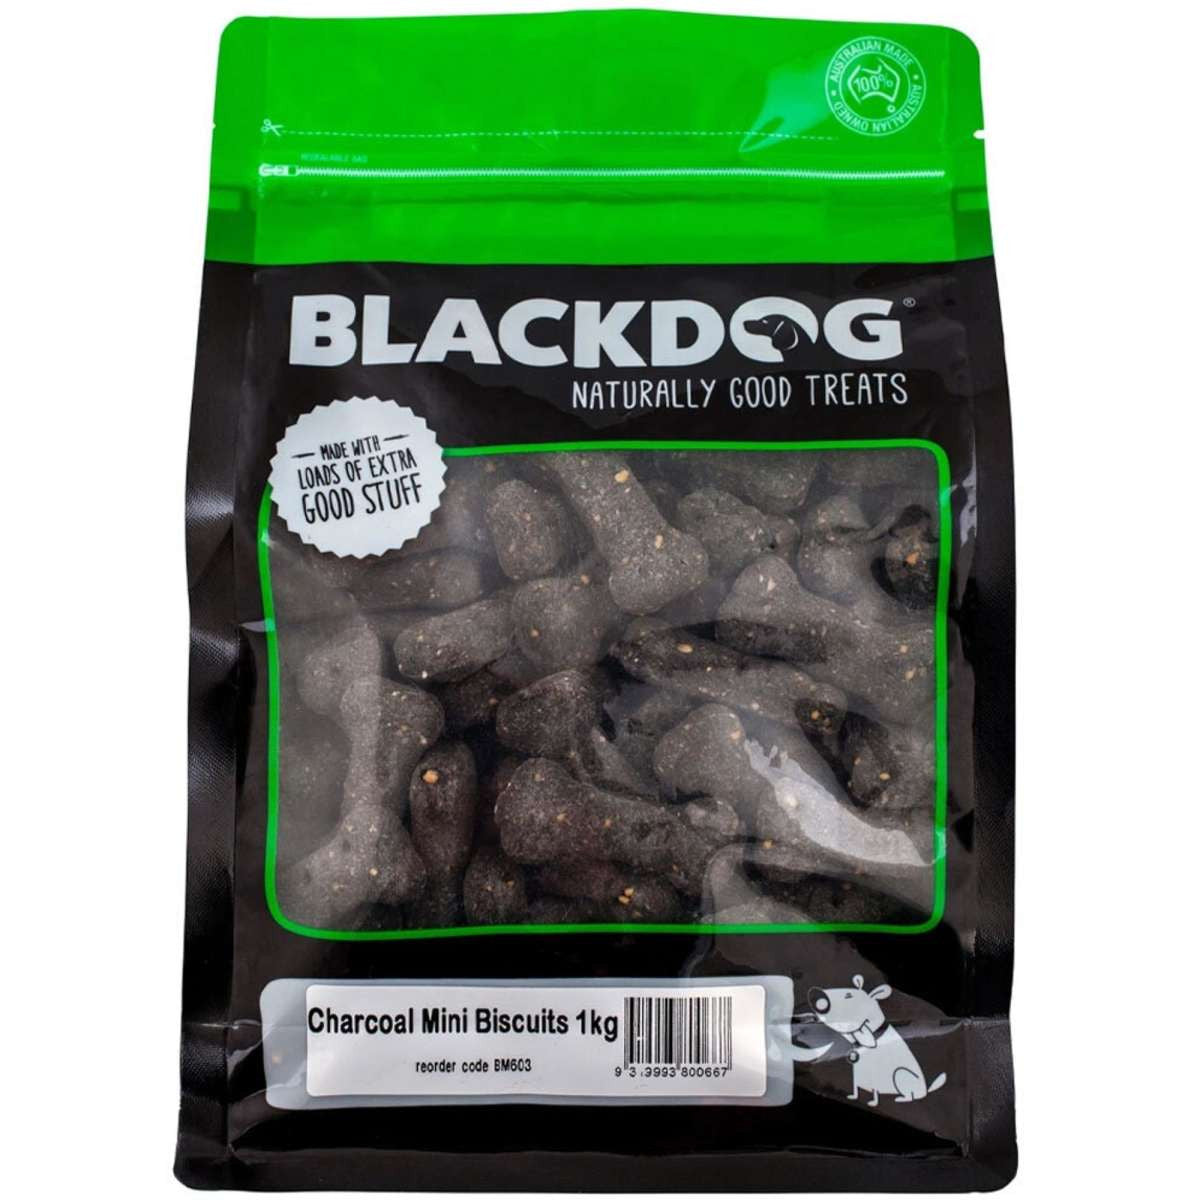 Blackdog Mini Charcoal Biscuits 1kg - Australian Made Healthy Dog Treats